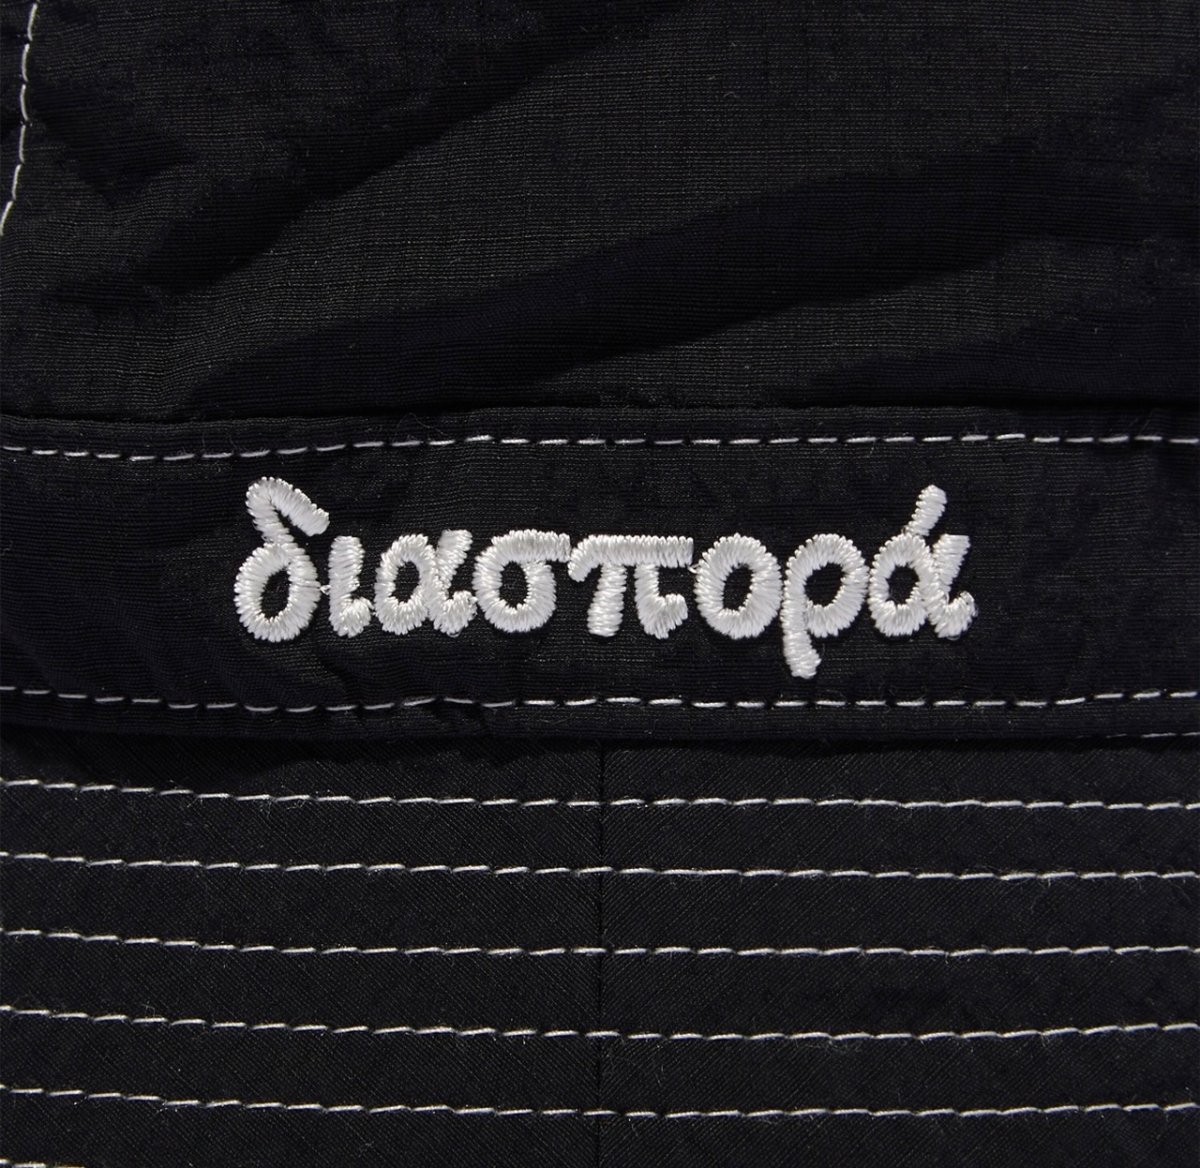 Diaspora skateboards ディアスポラ Contrast Bell Hat ハット (black 